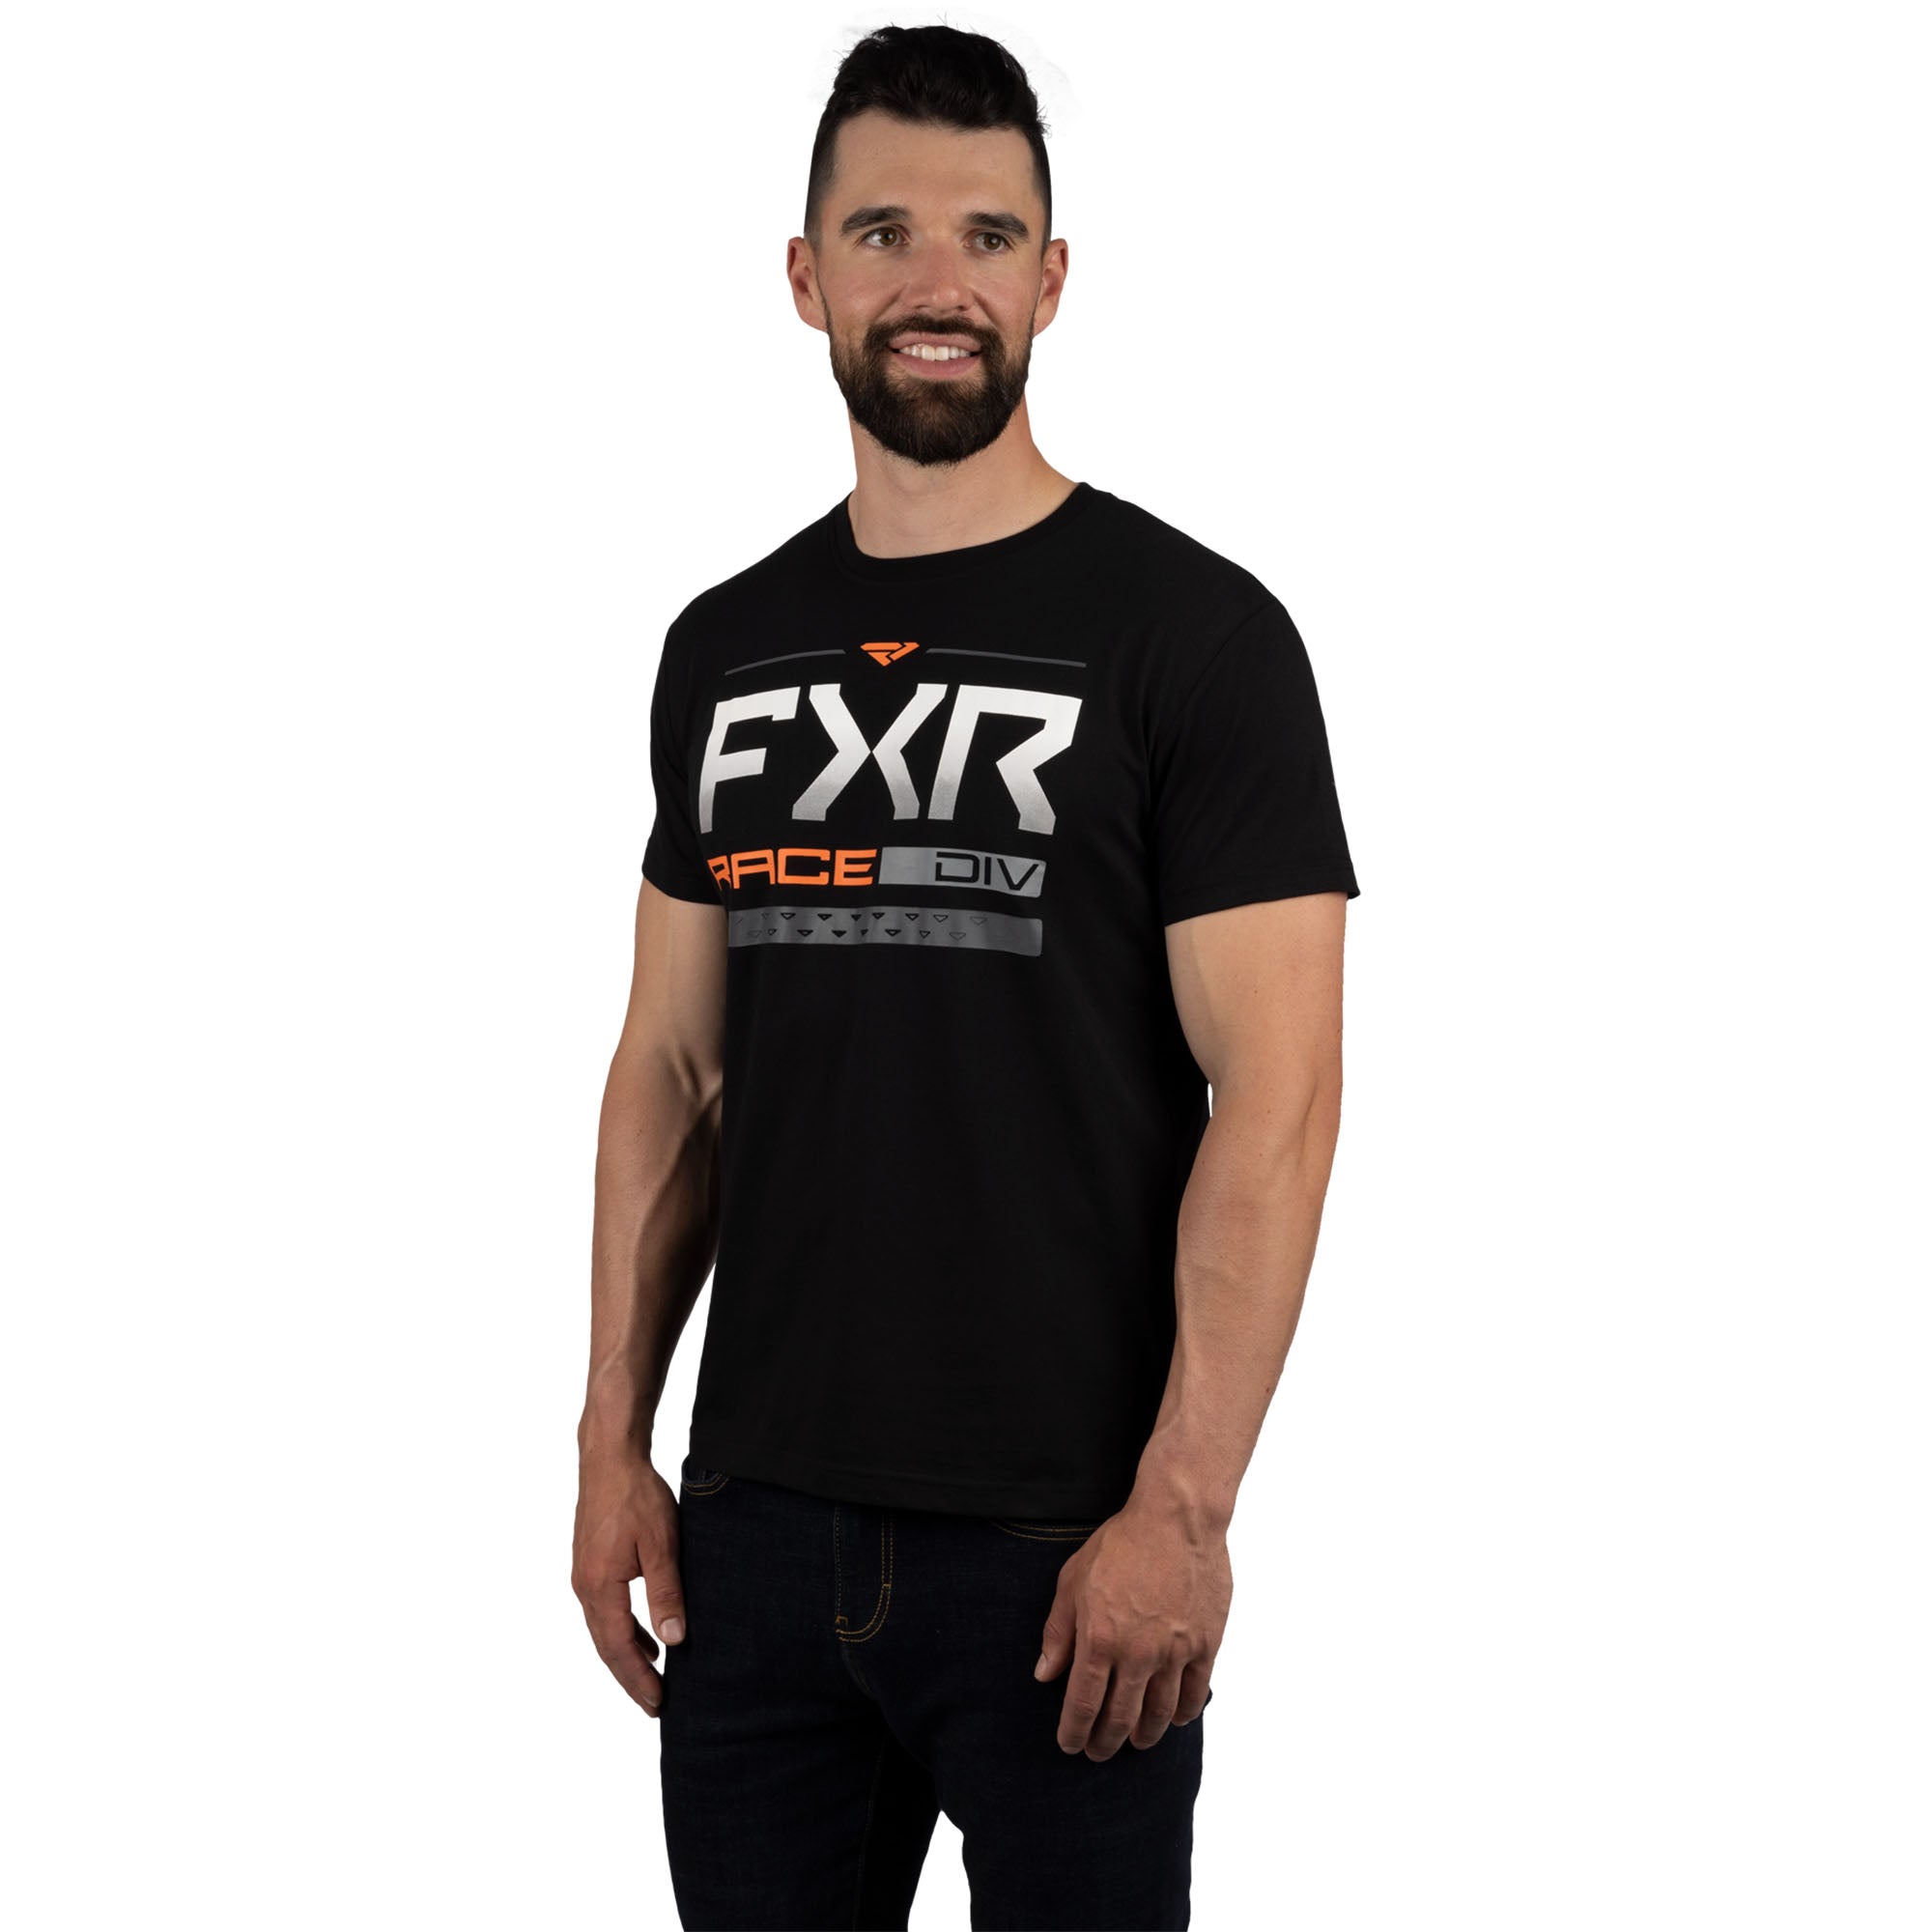 FXR Race Division Premium T-Shirt